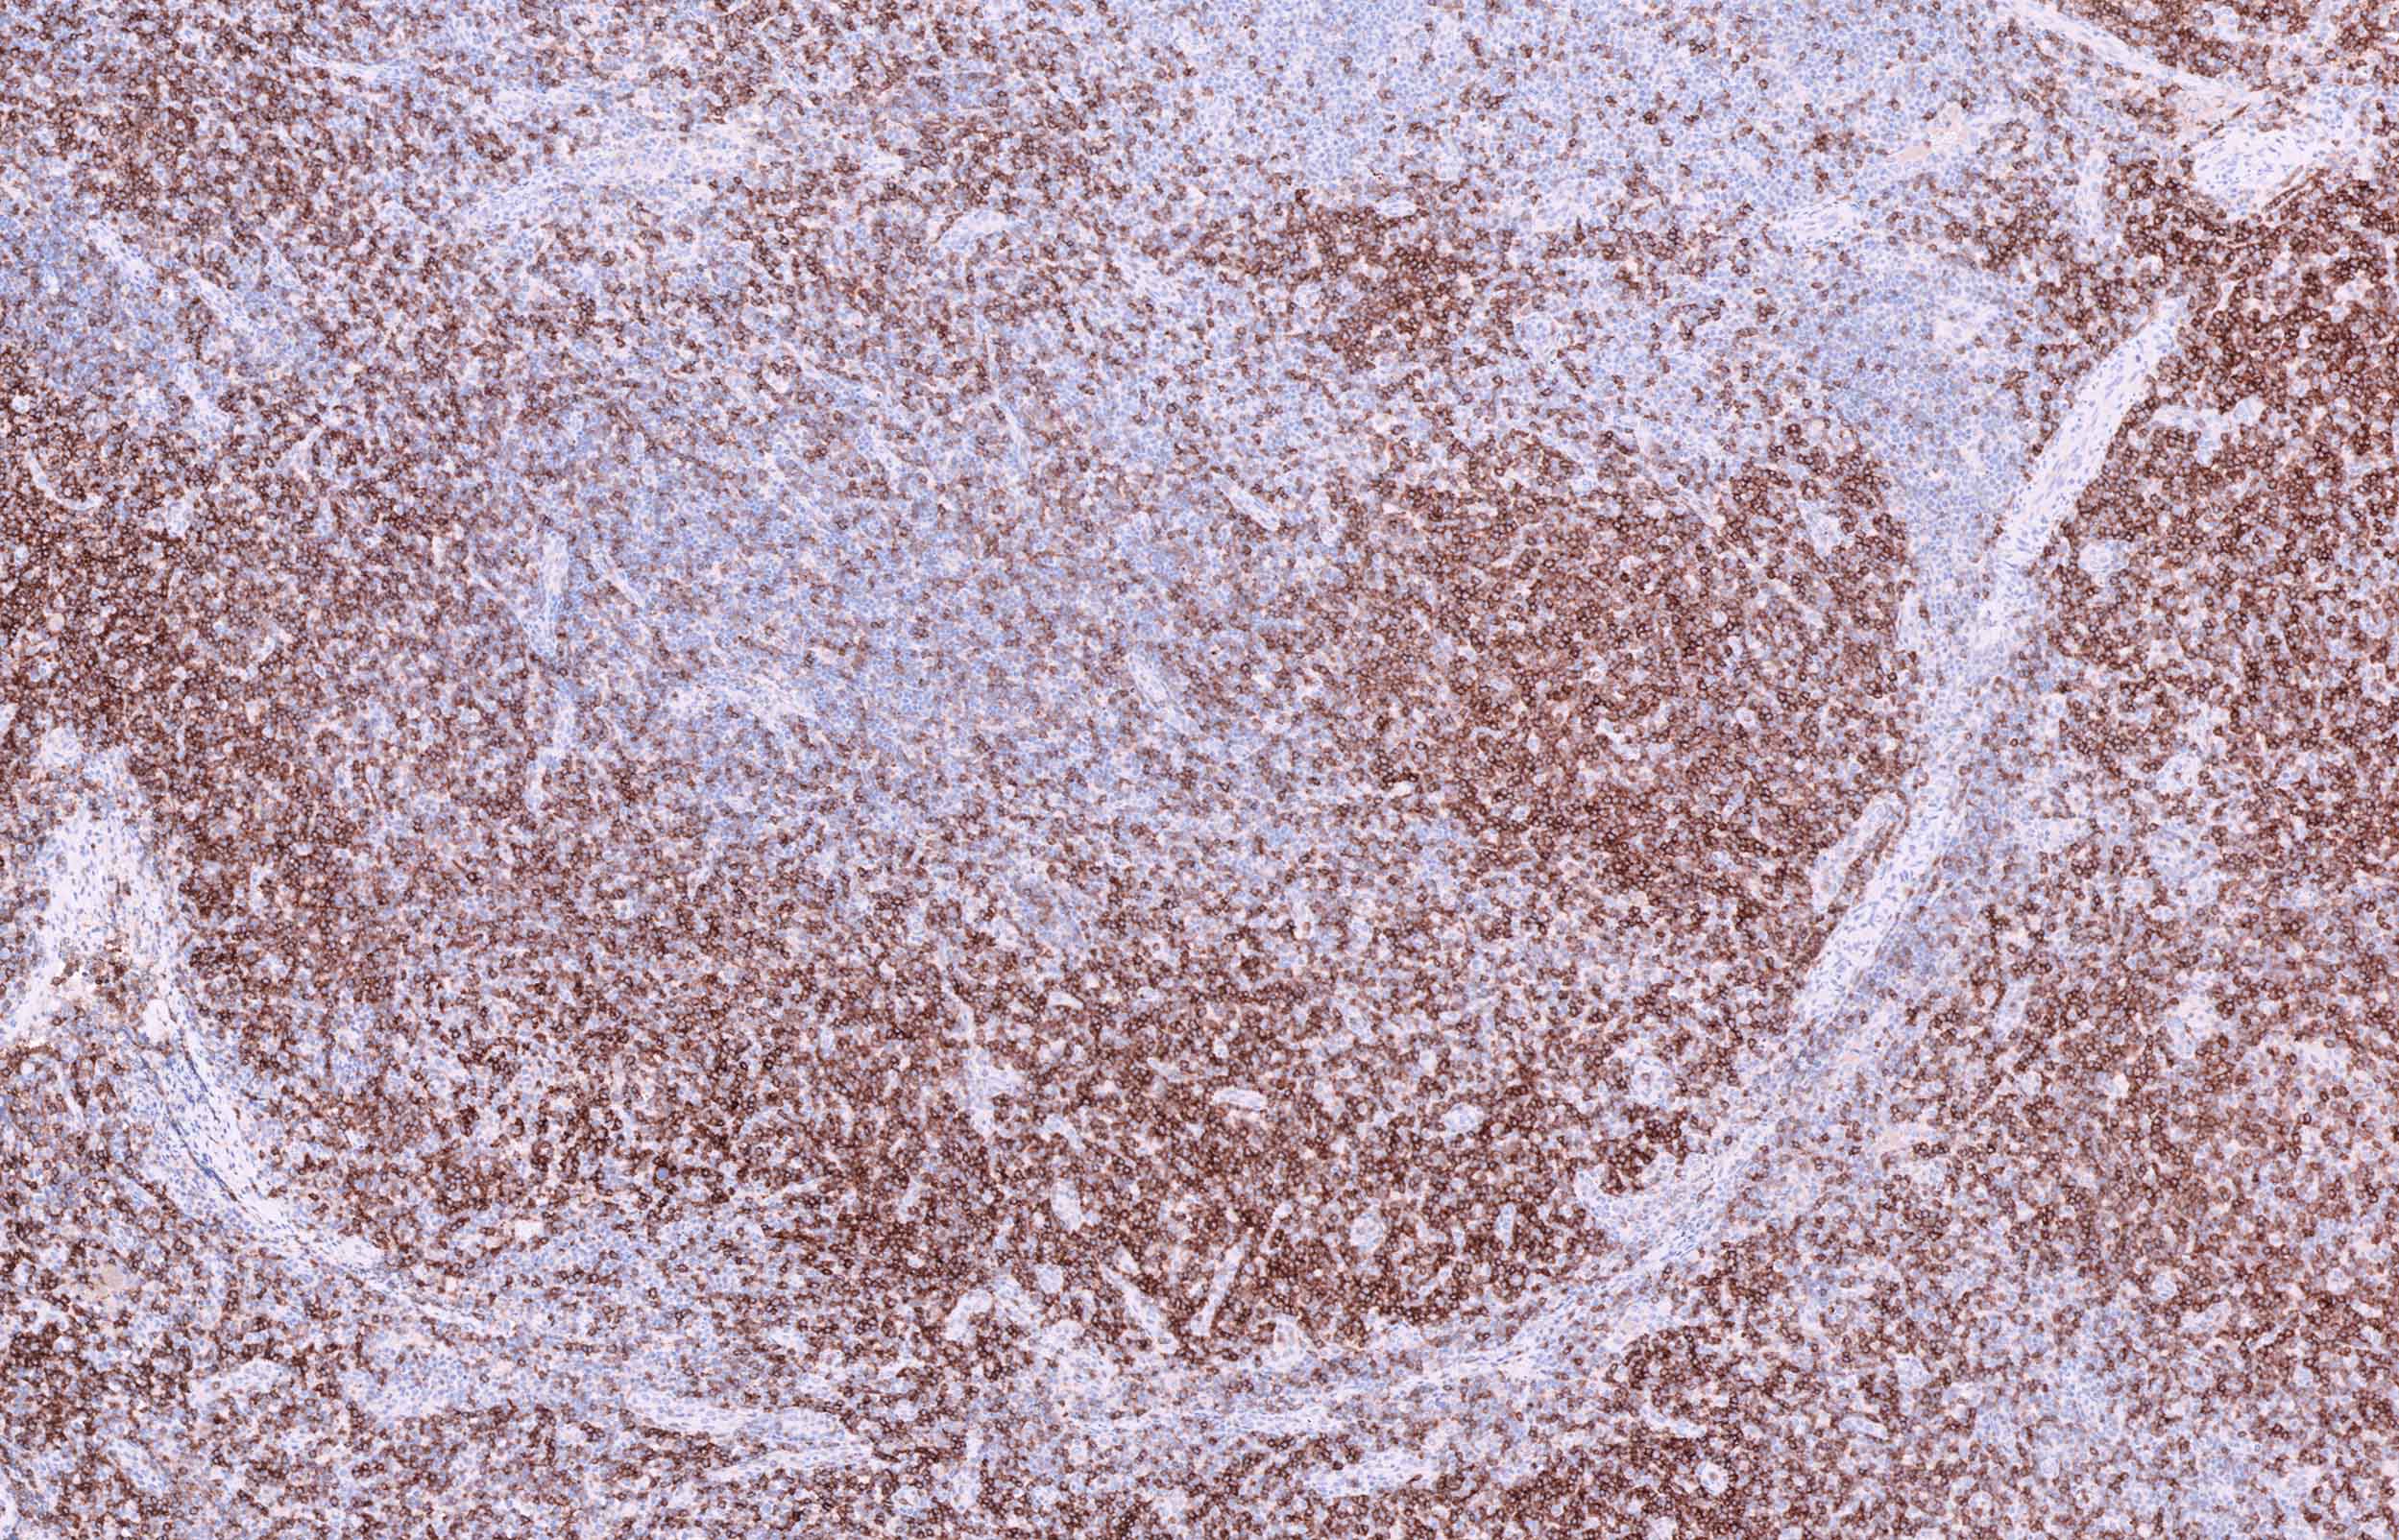 Angioimmunoblastic T cell lymphoma